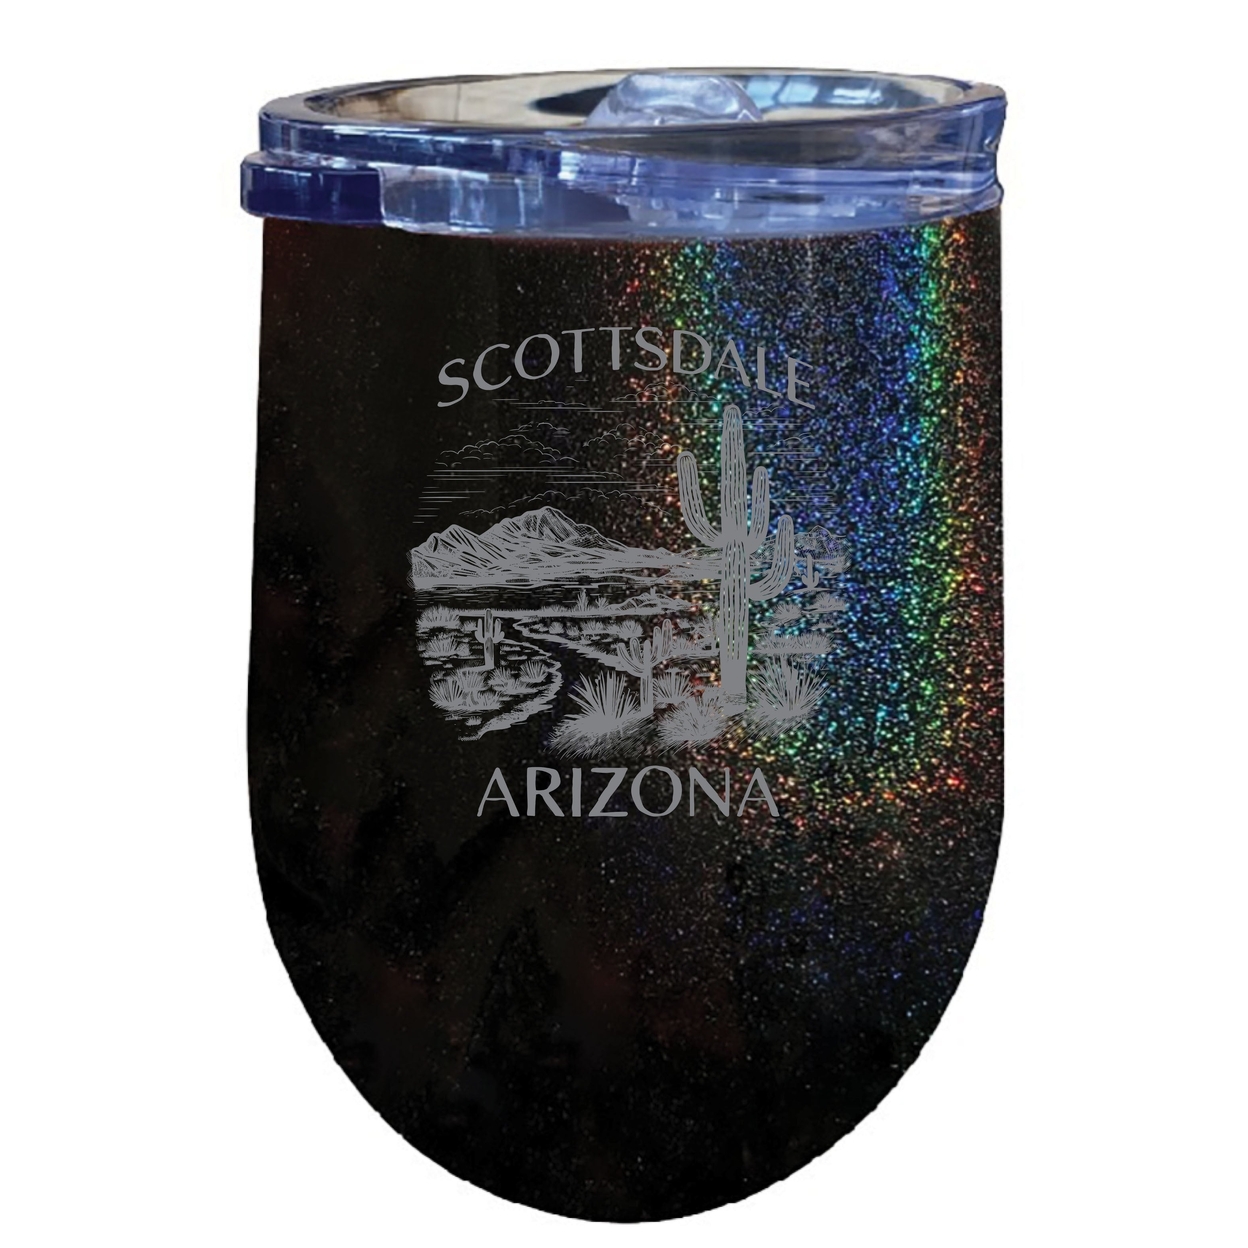 Scottsdale Arizona Souvenir 12 Oz Engraved Insulated Wine Stainless Steel Tumbler - Rainbow Glitter Gray,,2-Pack